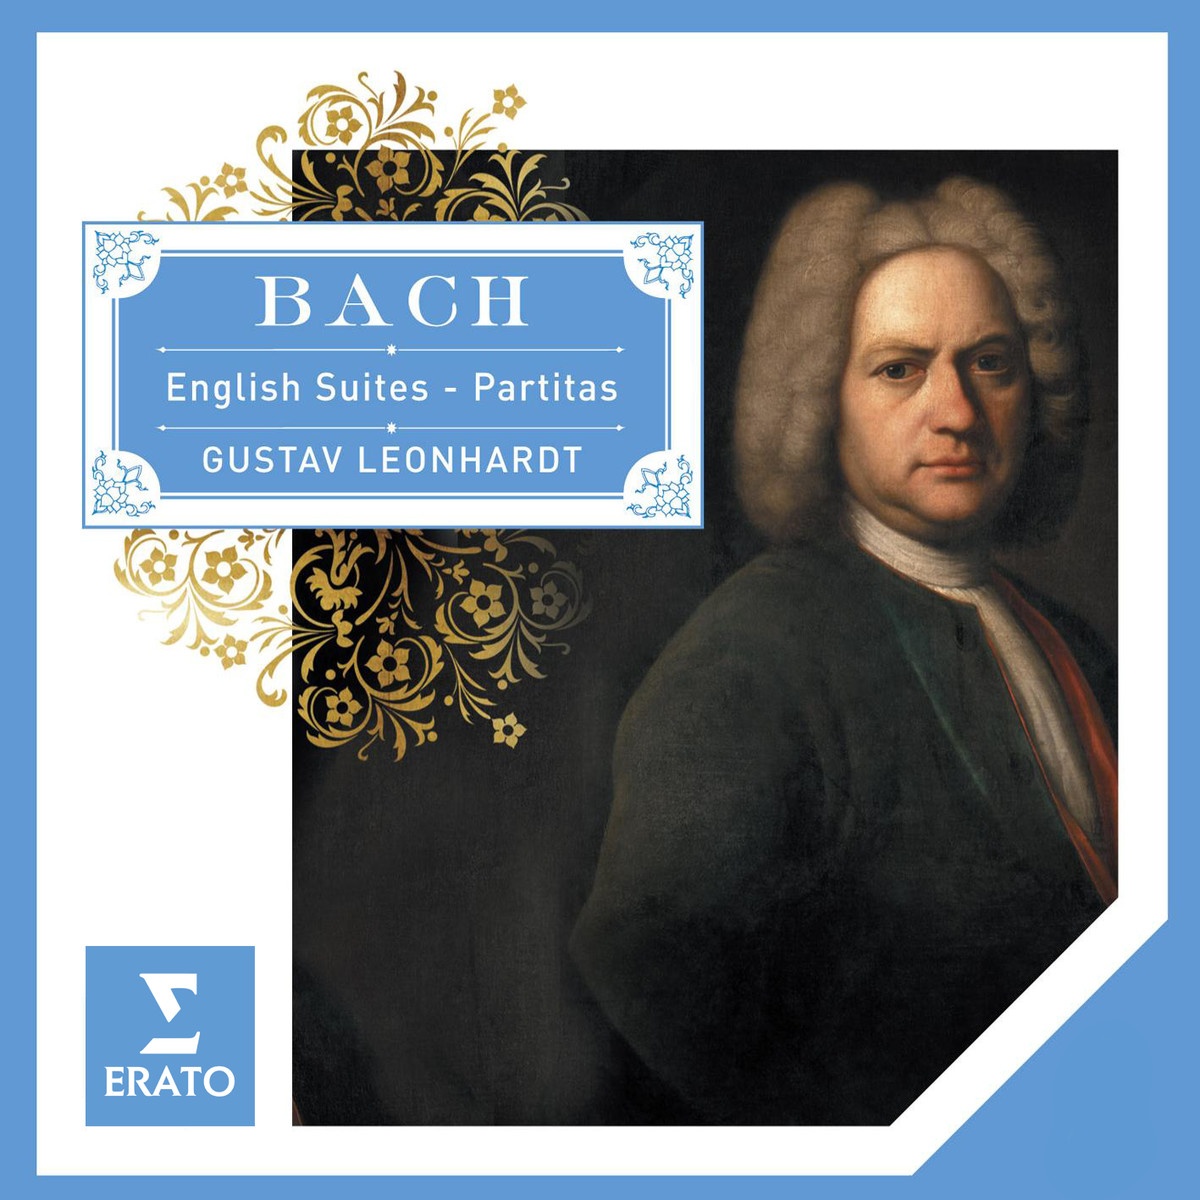 6 English Suites BWV806-811, No. 3 in G minor BWV808: Gigue